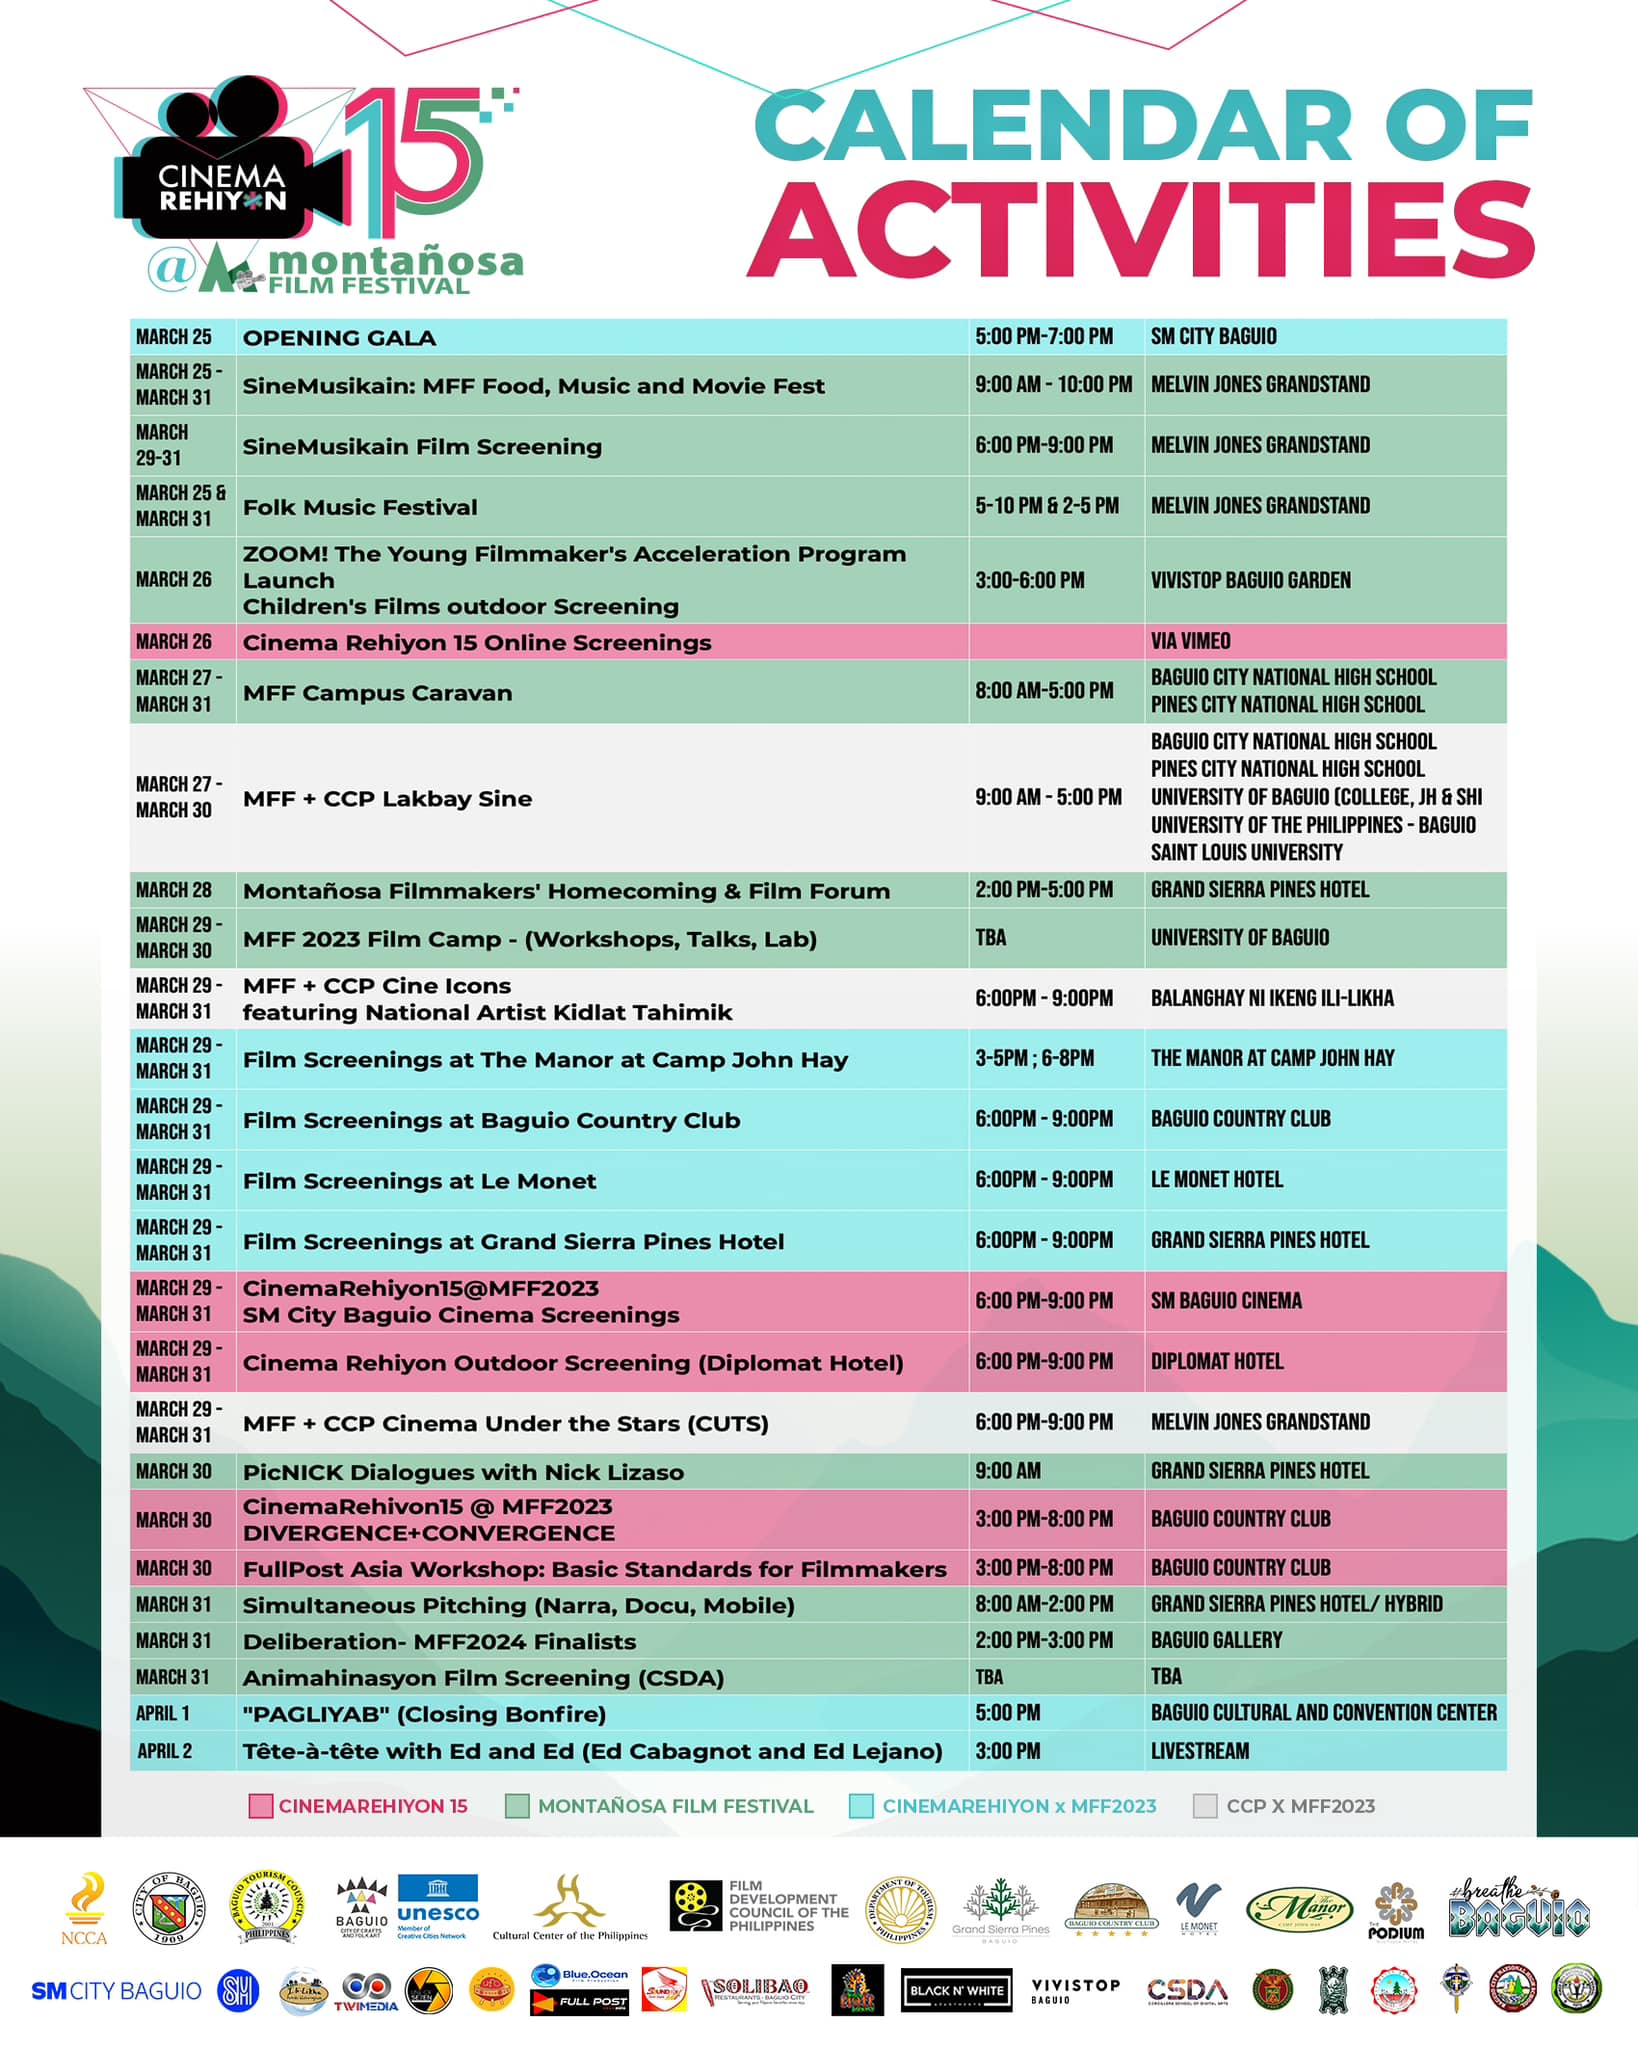 Montanosa Film Festival 2023 Calendar of Activities